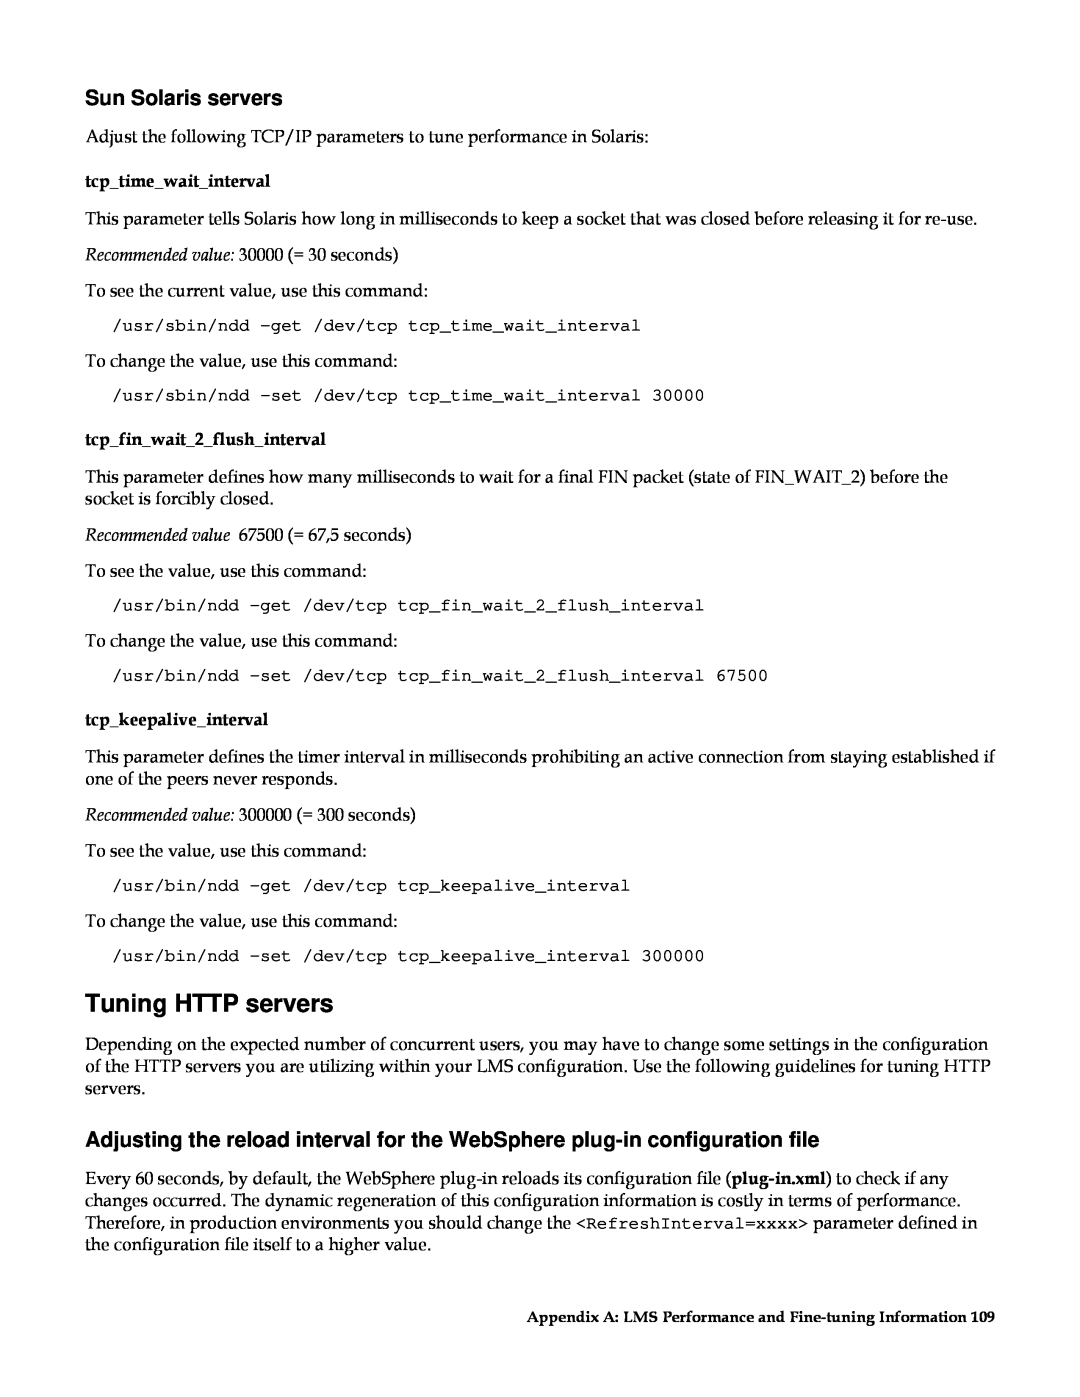 IBM G210-1784-00 manual Tuning HTTP servers, Sun Solaris servers, tcptimewaitinterval, tcpfinwait2flushinterval 